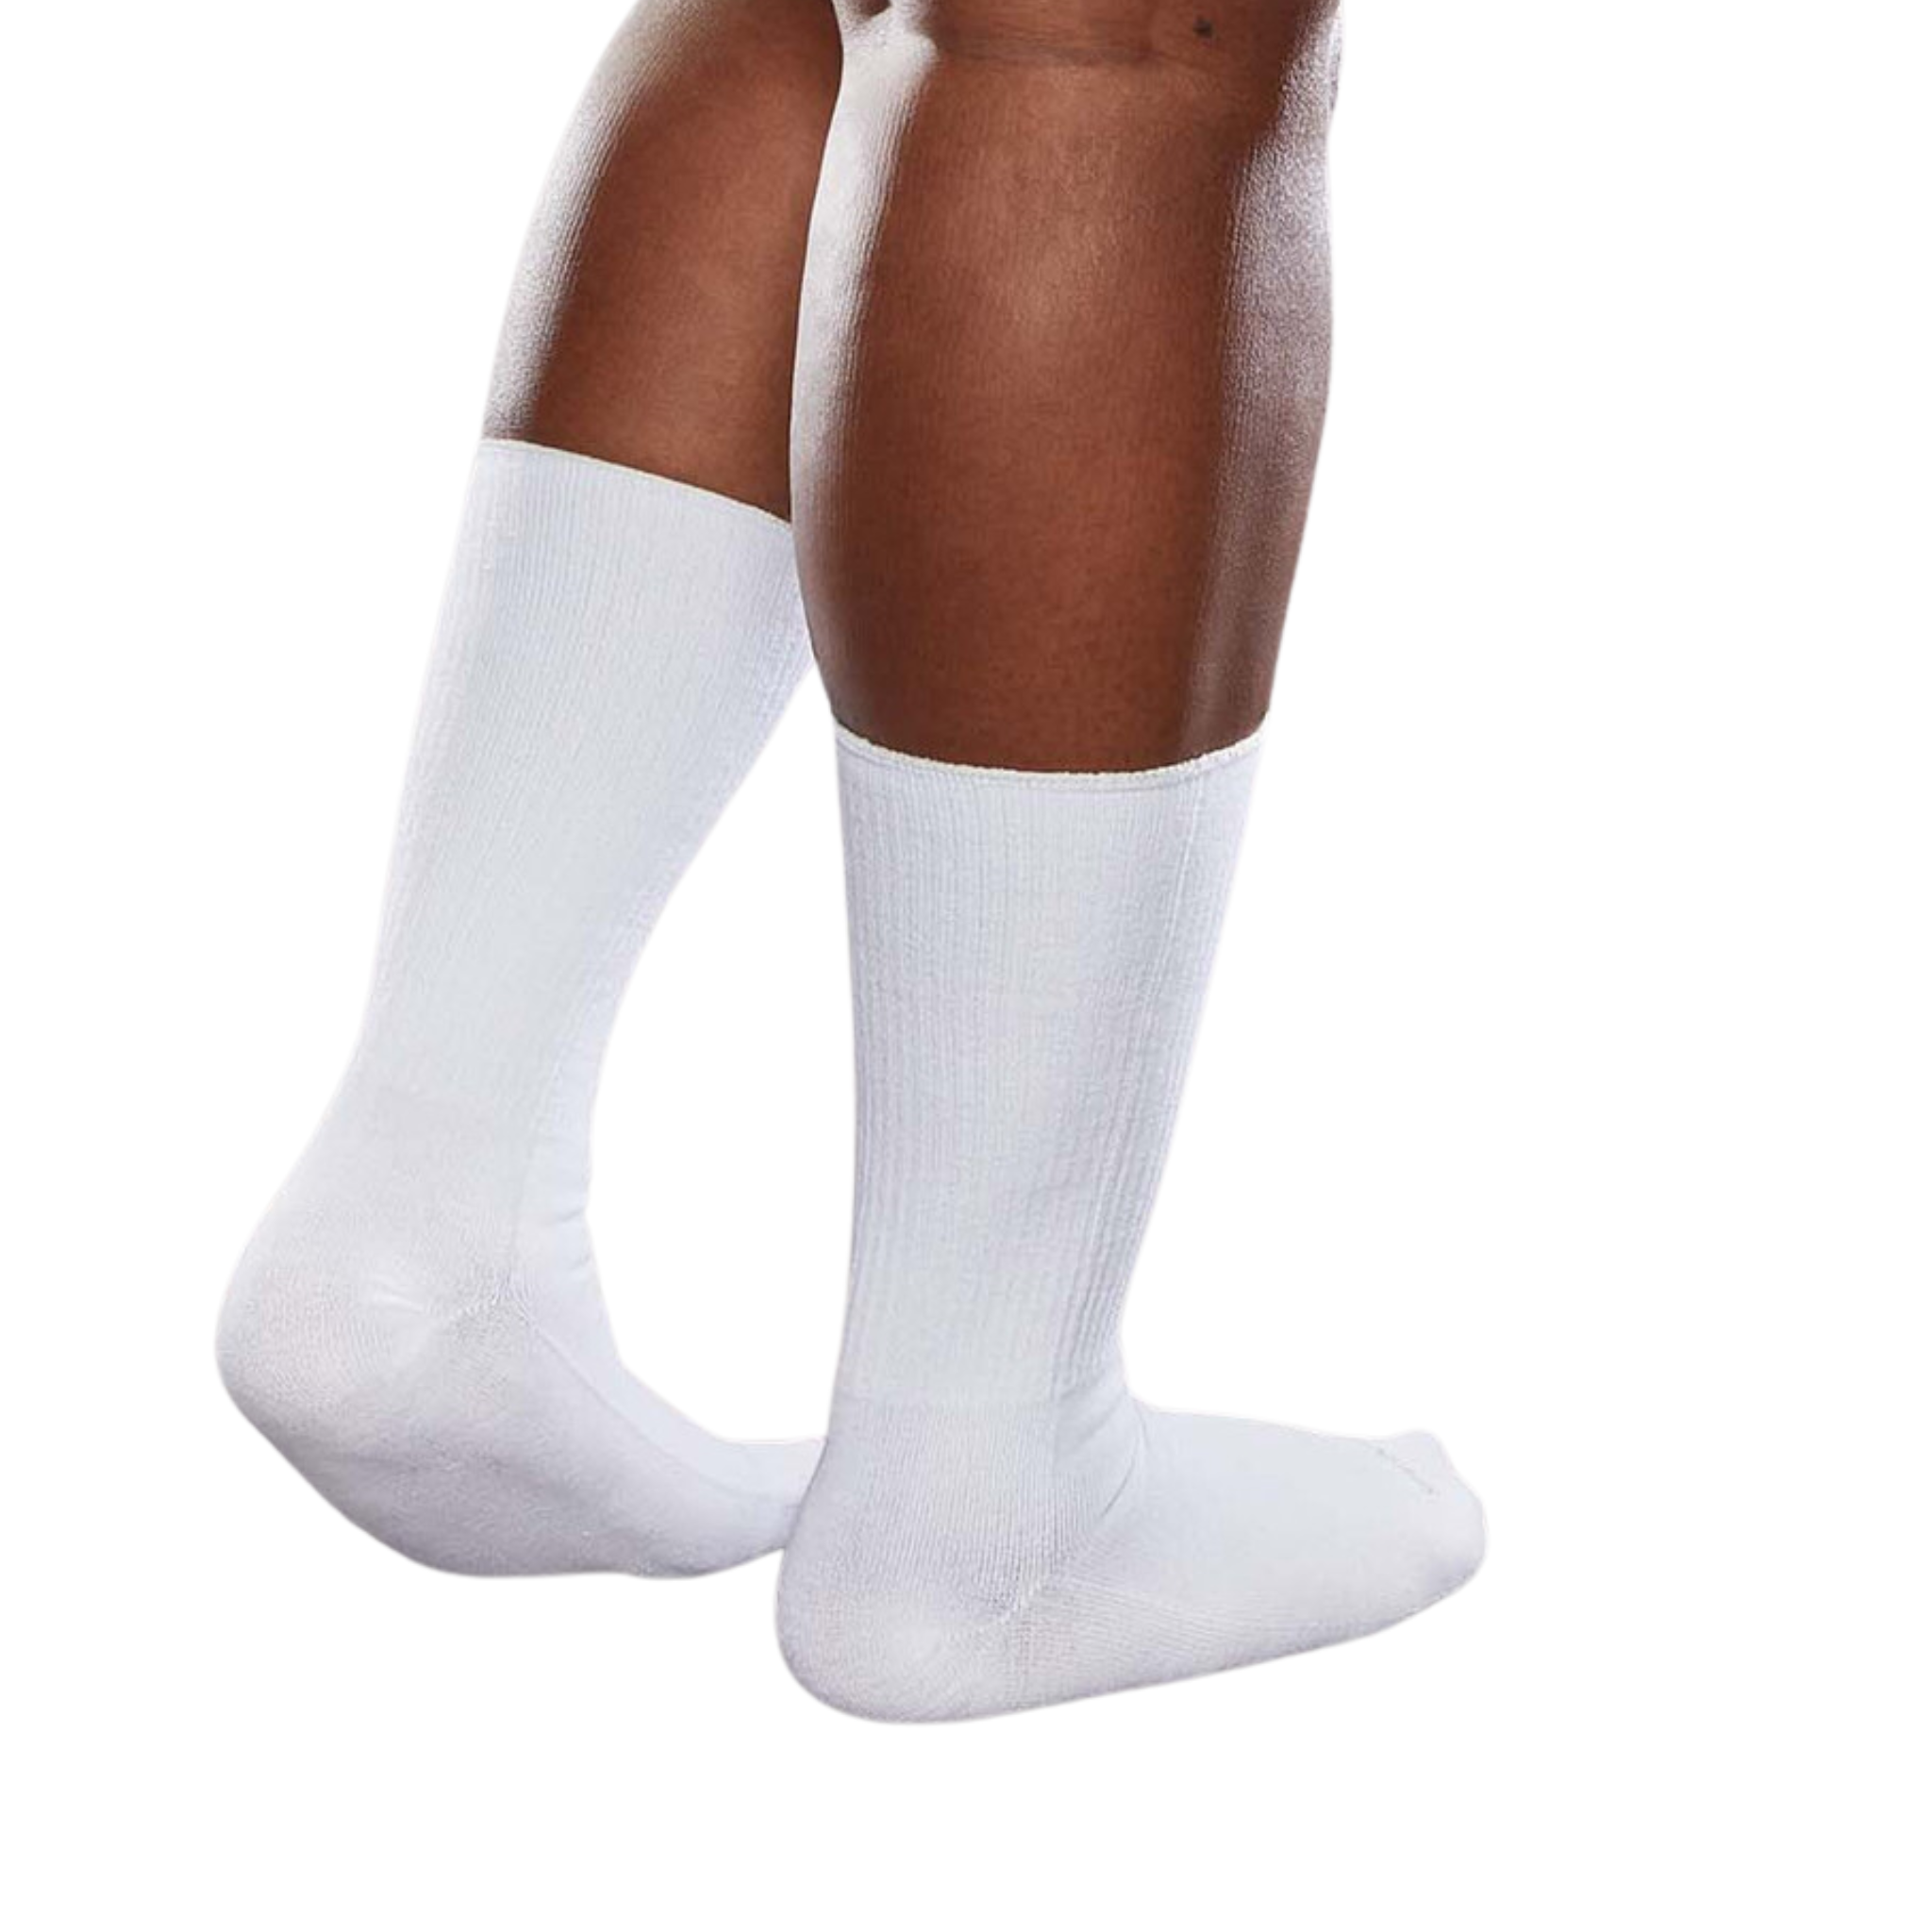 Shop SmartKnit Seamless Socks - Comfortable, Stylish, and Diabetic